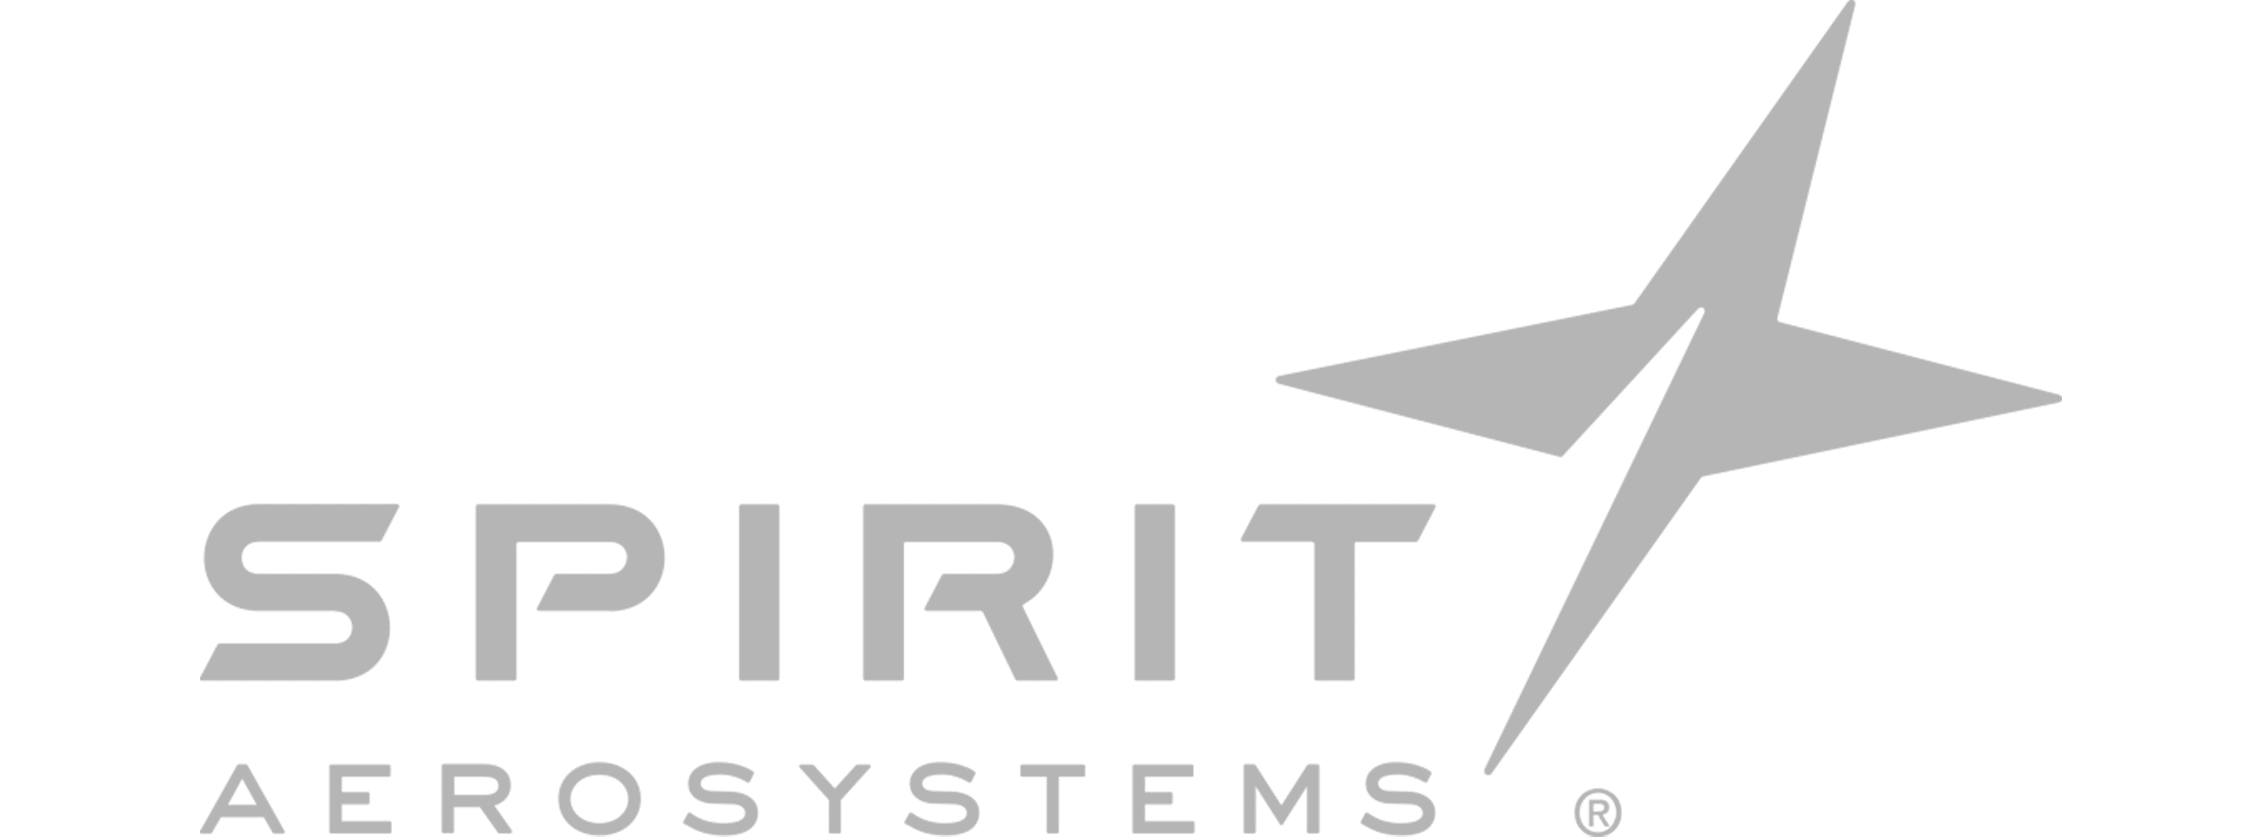 spirit-aerosystems-gray